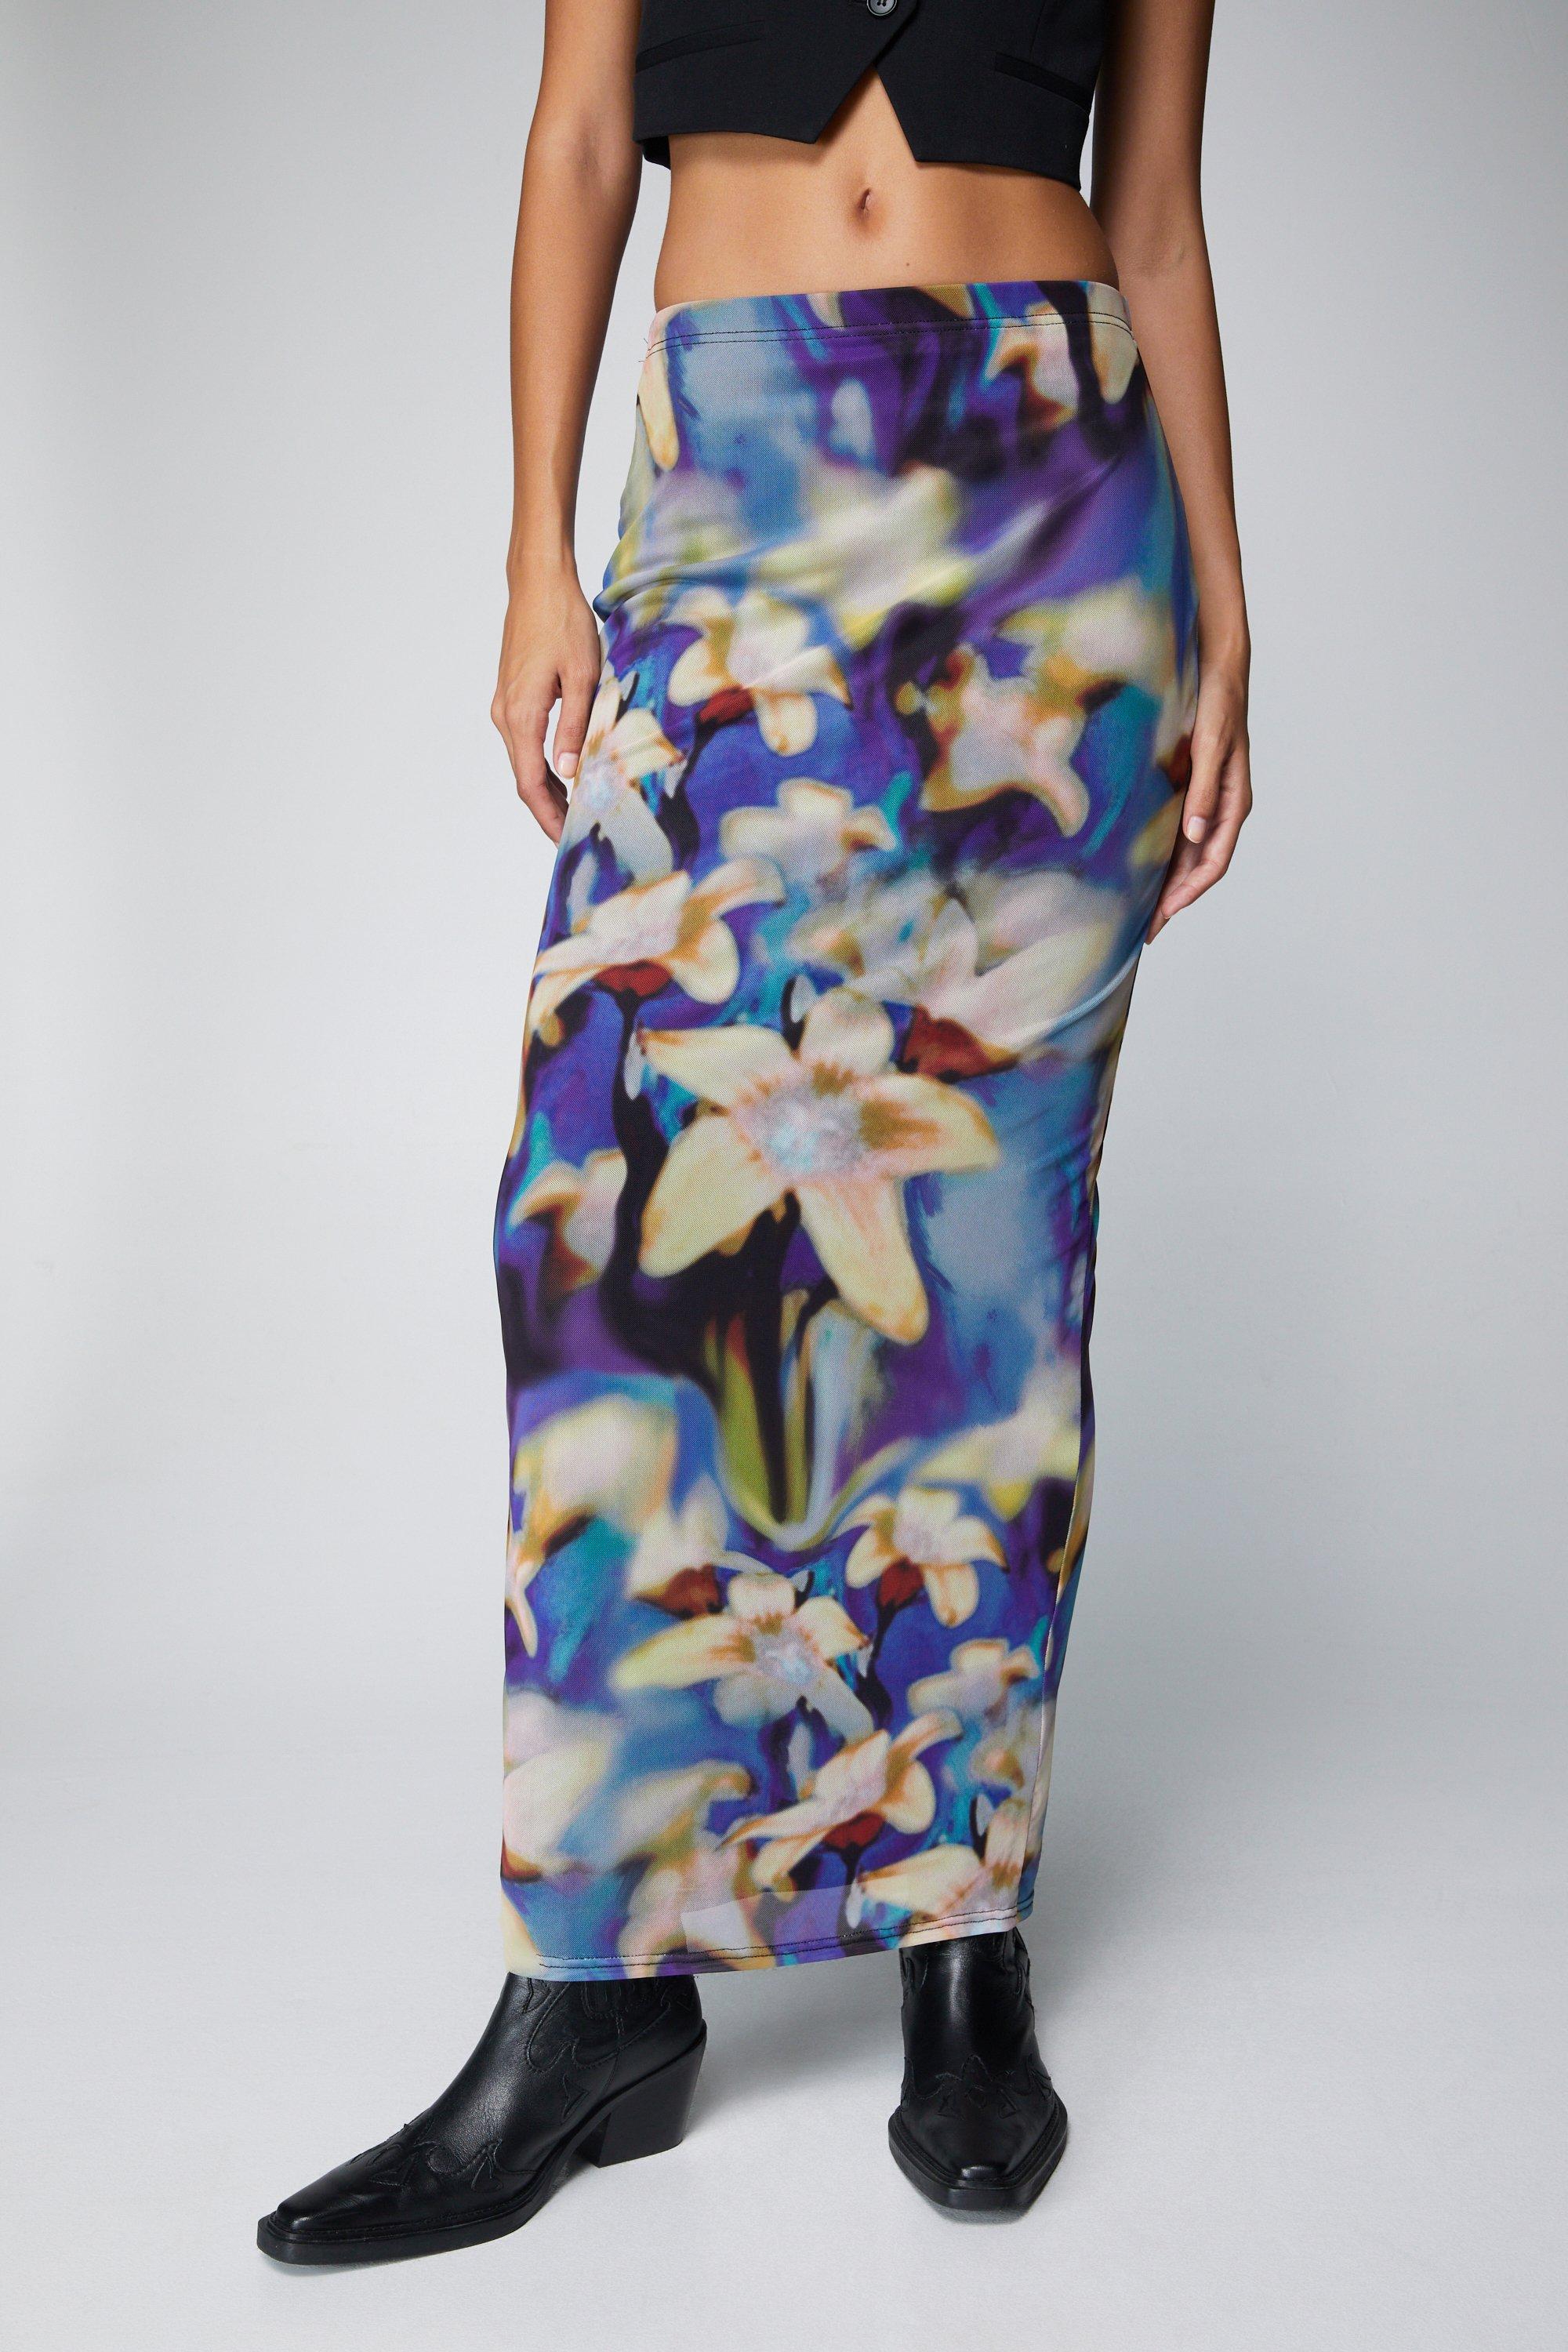 Floral Printed High Waist Mesh Skirt